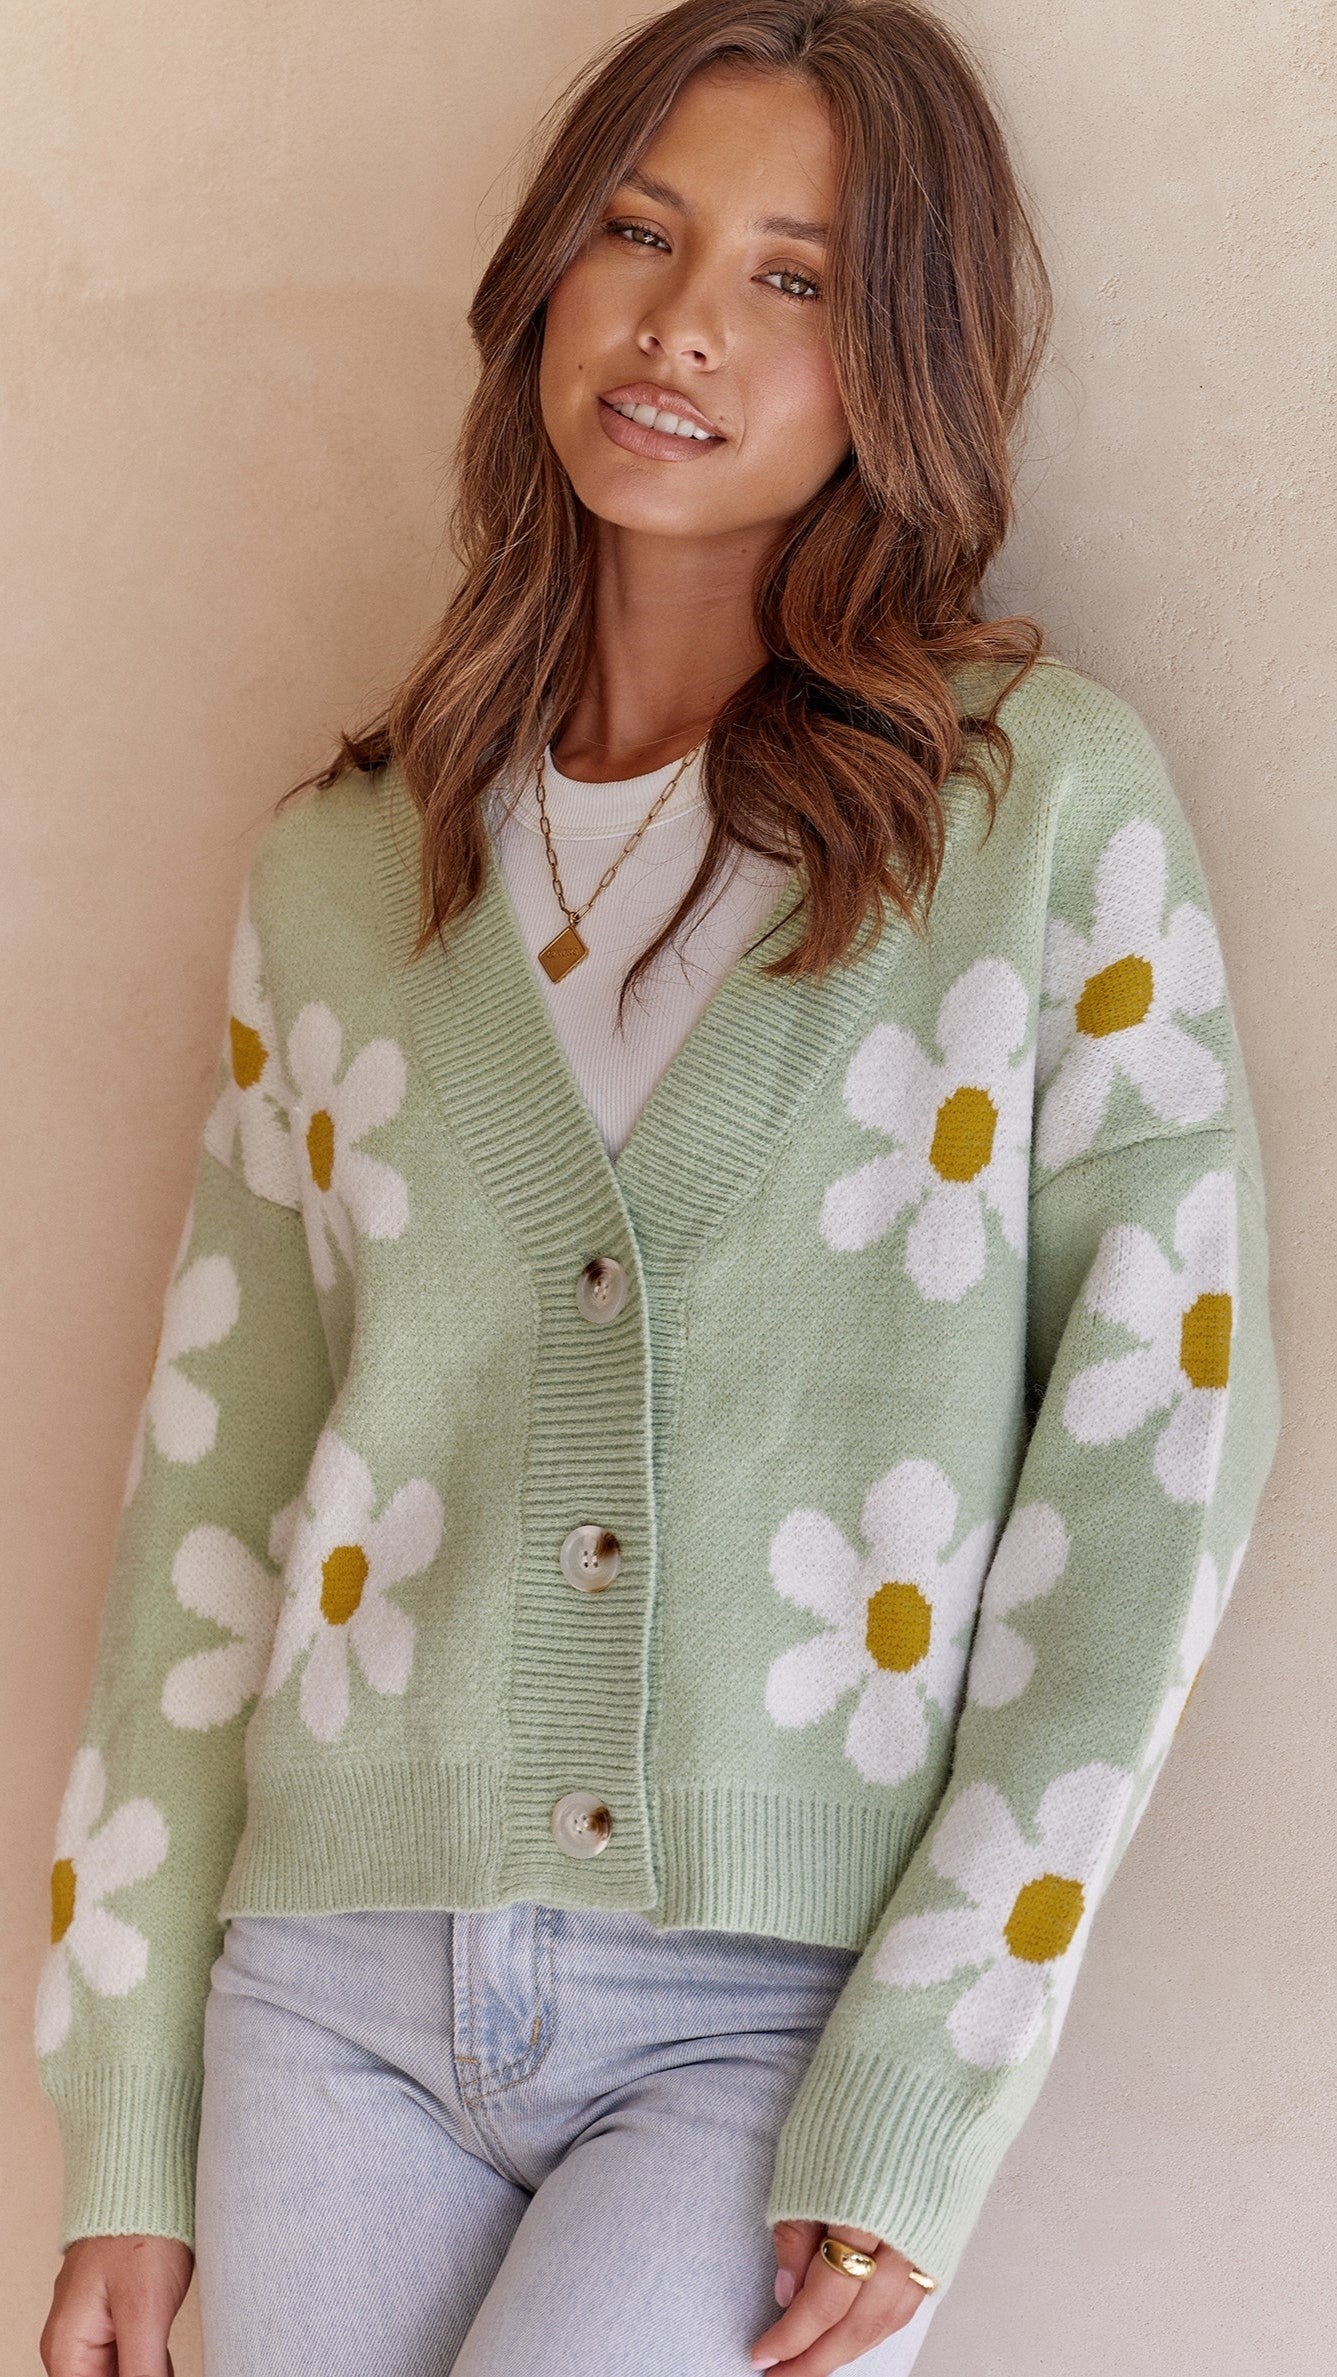 Sweet Green Floral Cardigan Sweater